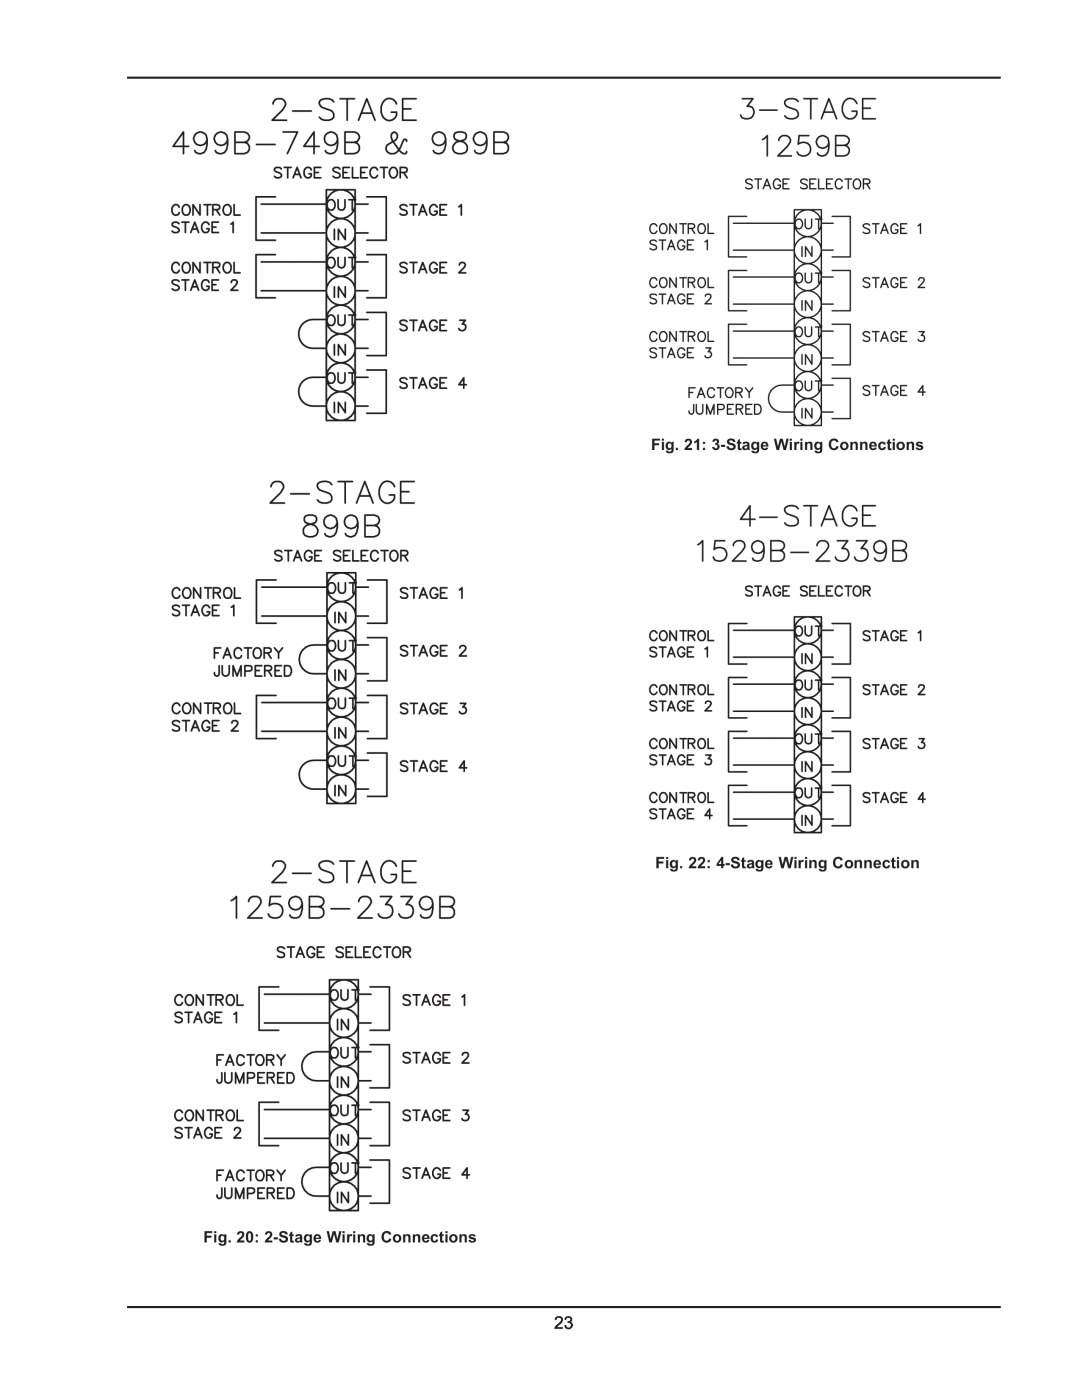 Raypak 399B-2339B operating instructions 3-StageWiring Connections, 4-StageWiring Connection, 2-StageWiring Connections 